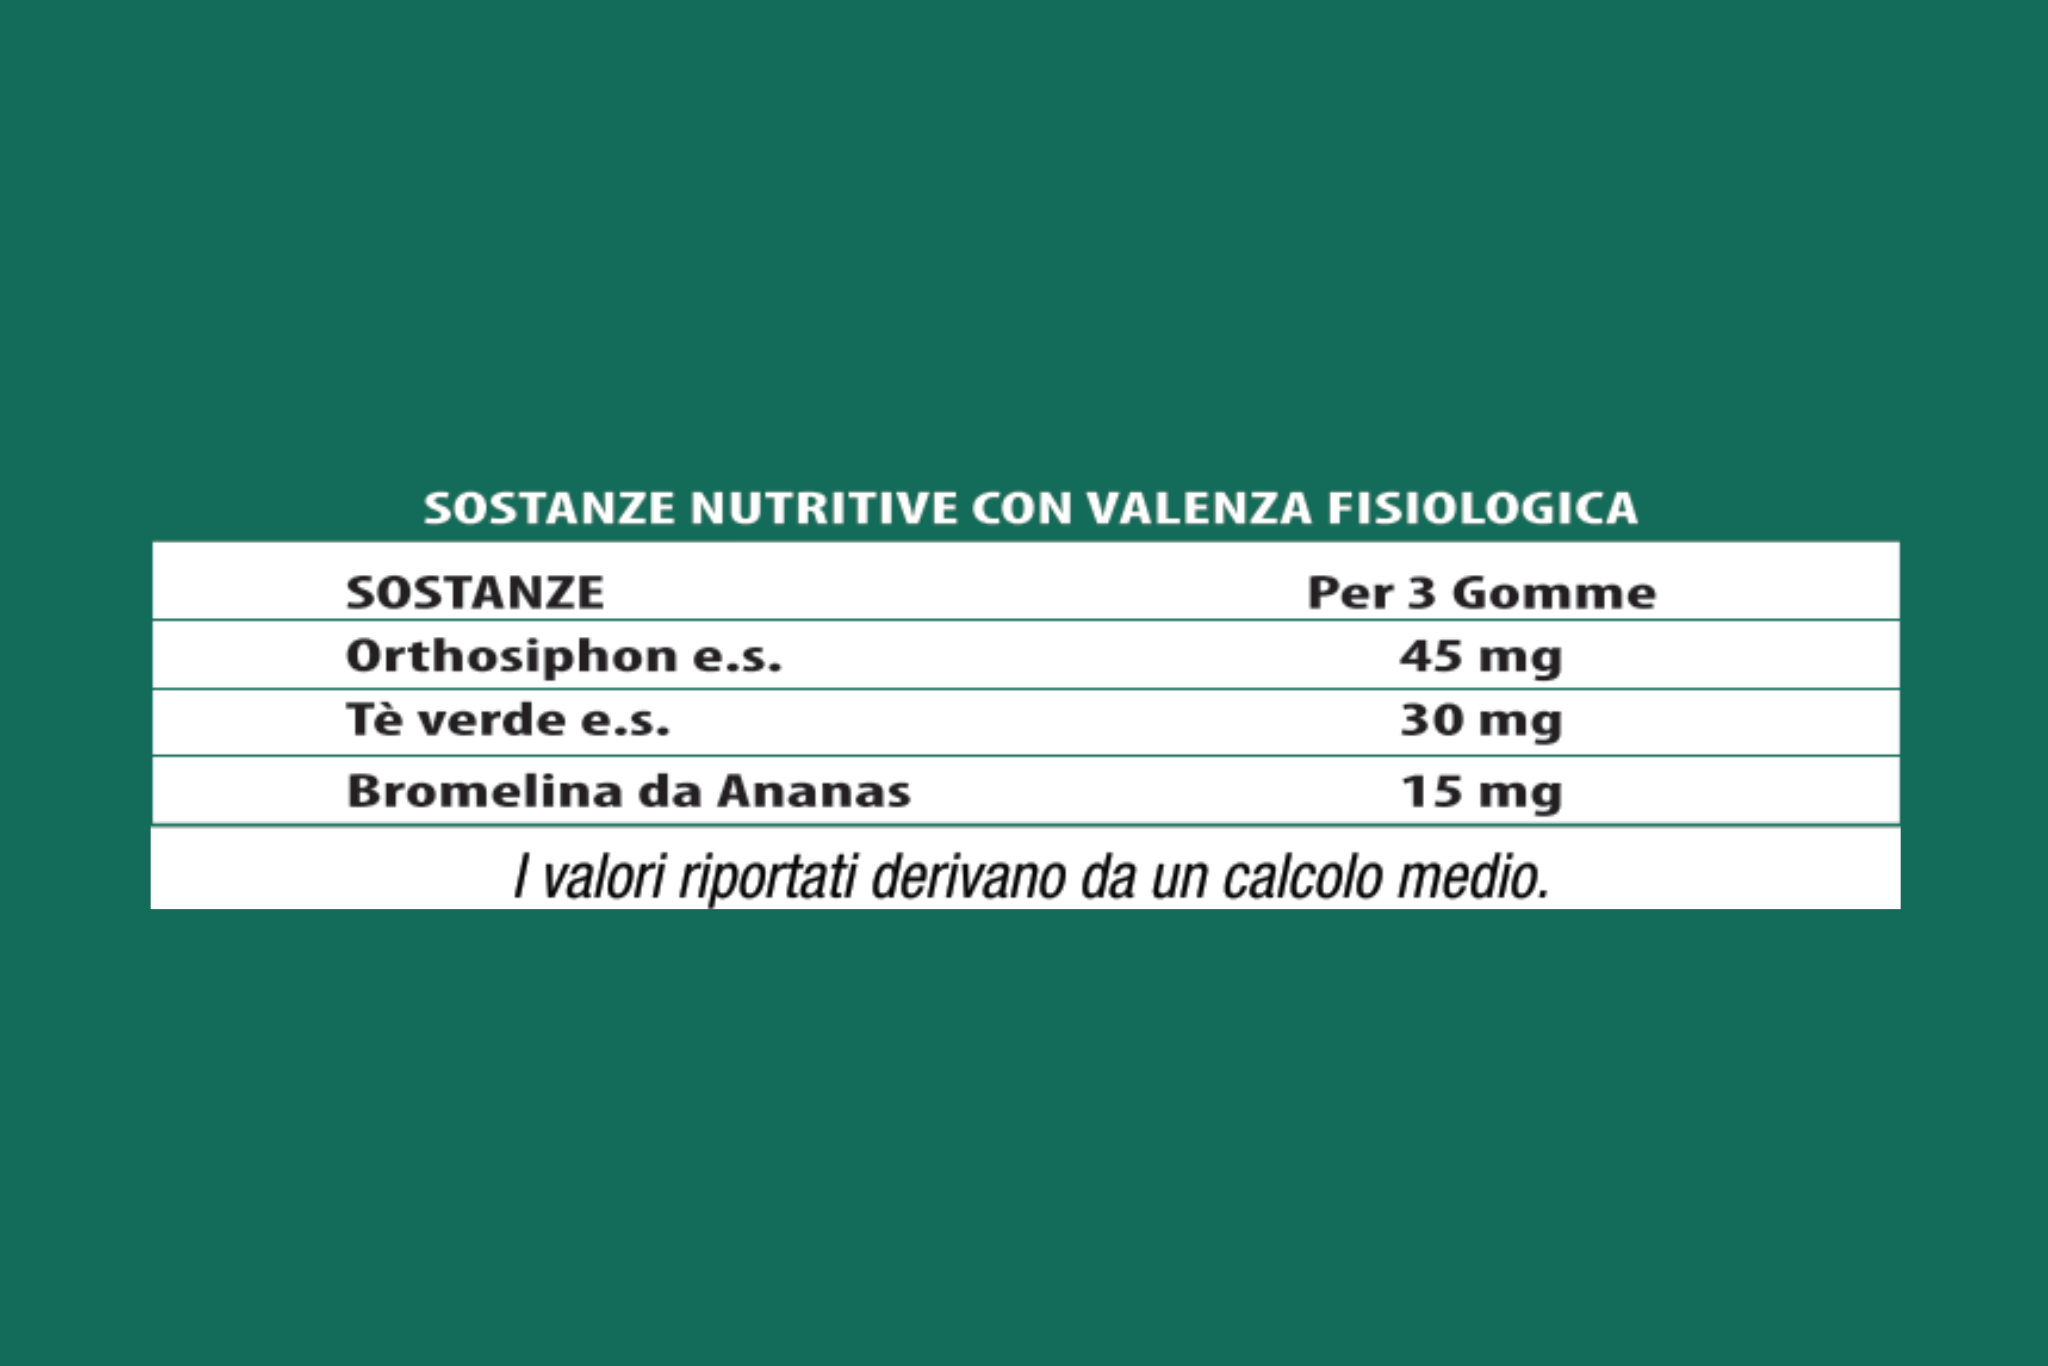 Body Drain Gum sostanze nutritive: orthosiphon, tè verde, bromelina da ananas